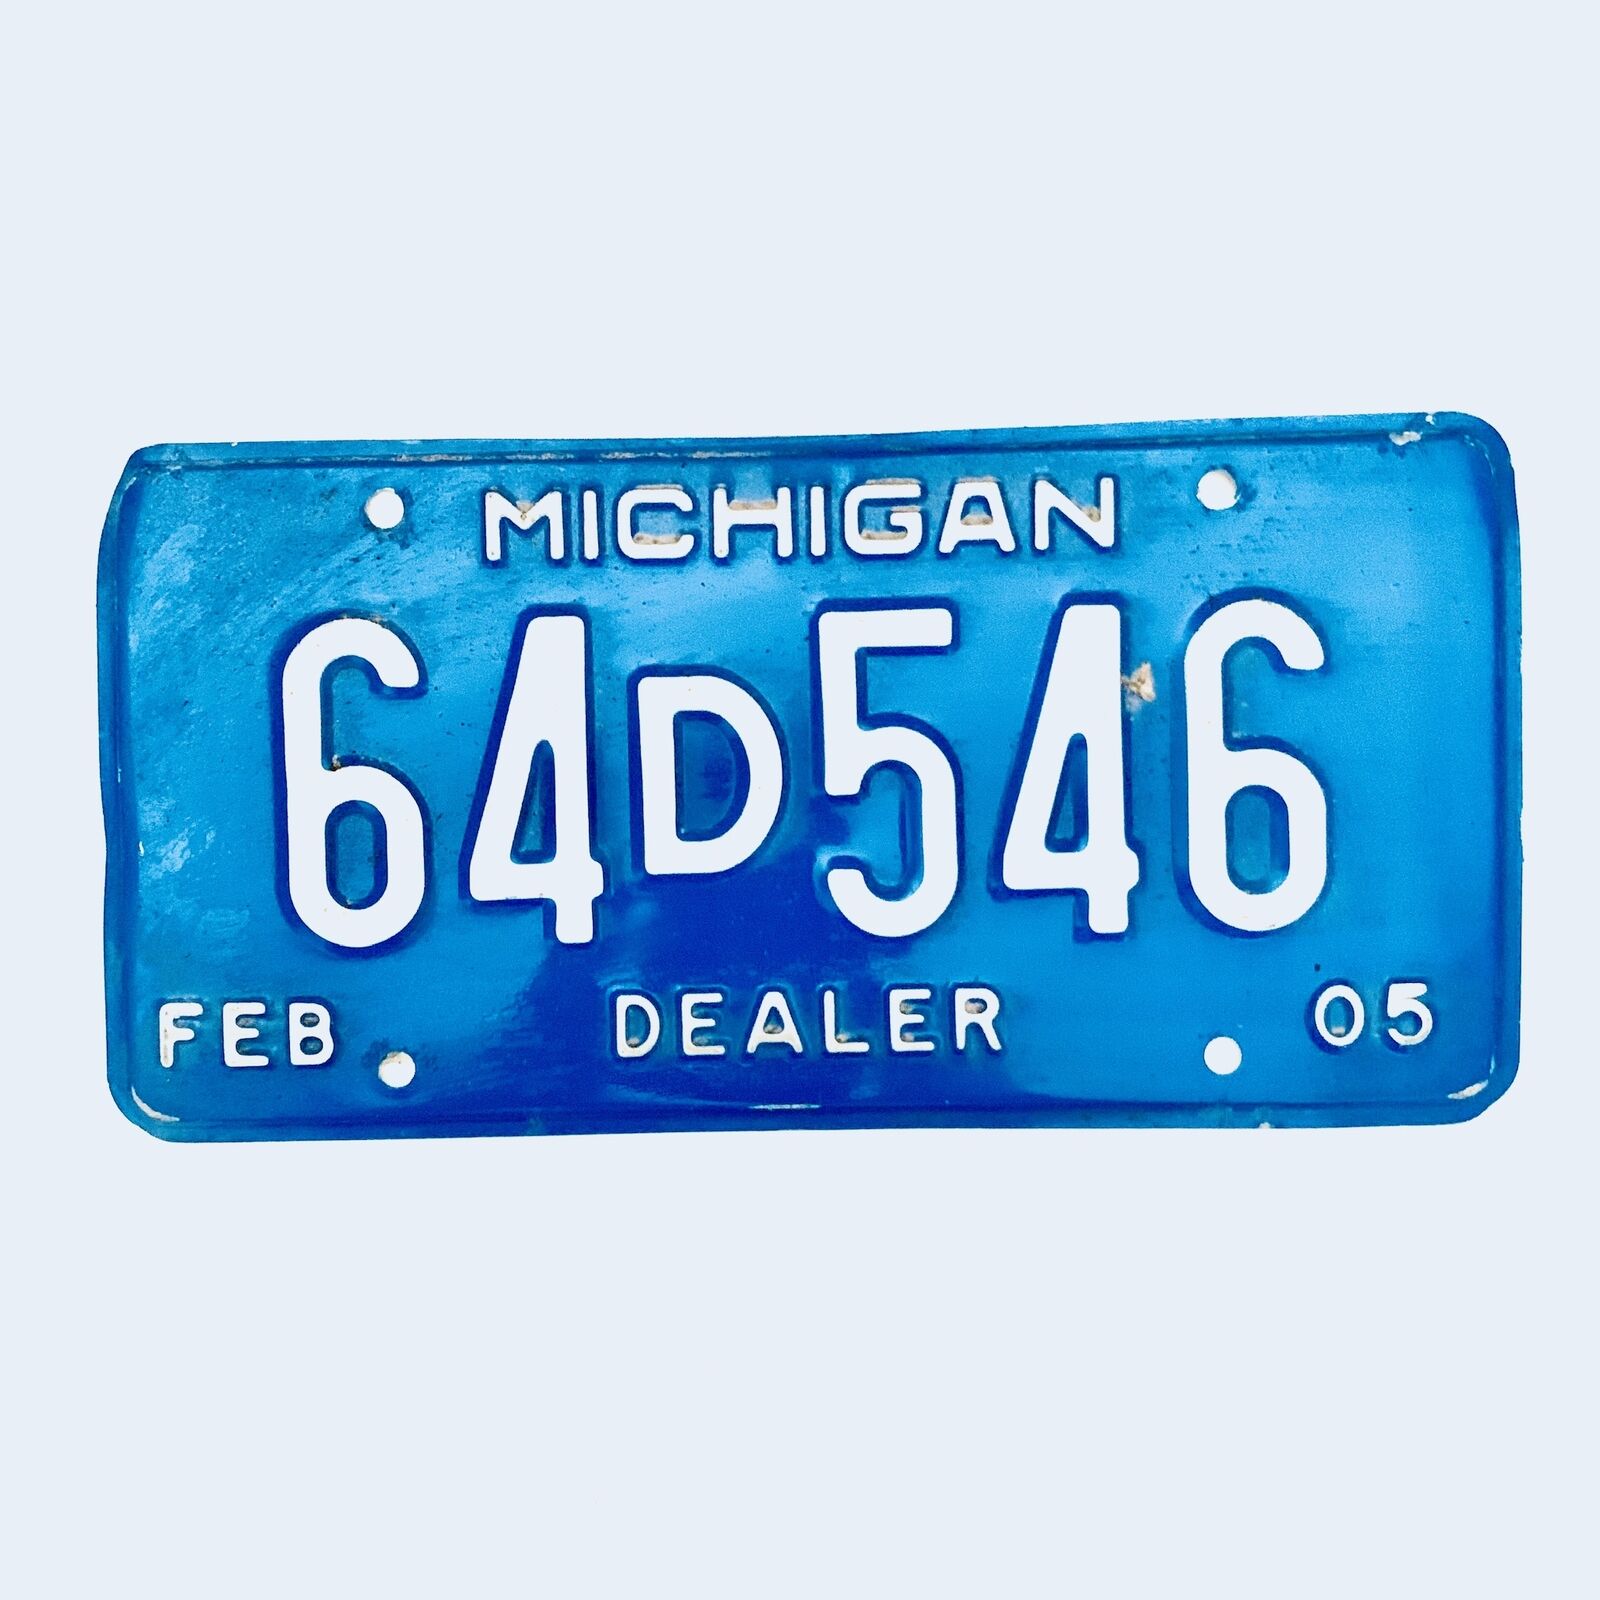 2005 United States Michigan Base Dealer License Plate 64D546